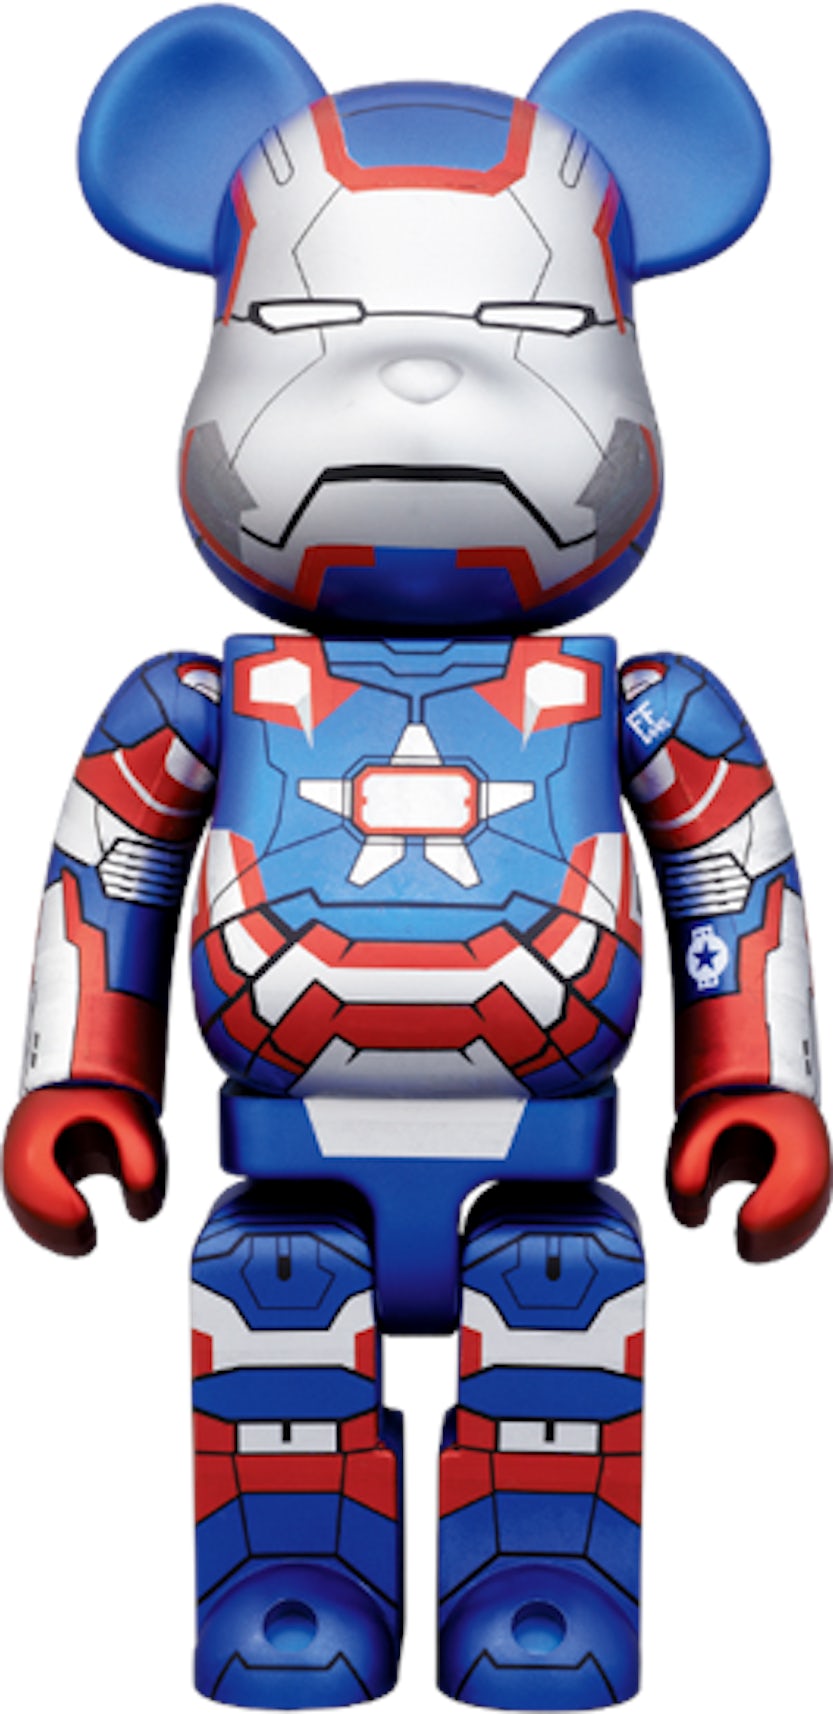 Bearbrick x Iron Man Iron Patriot 400% Blue - US